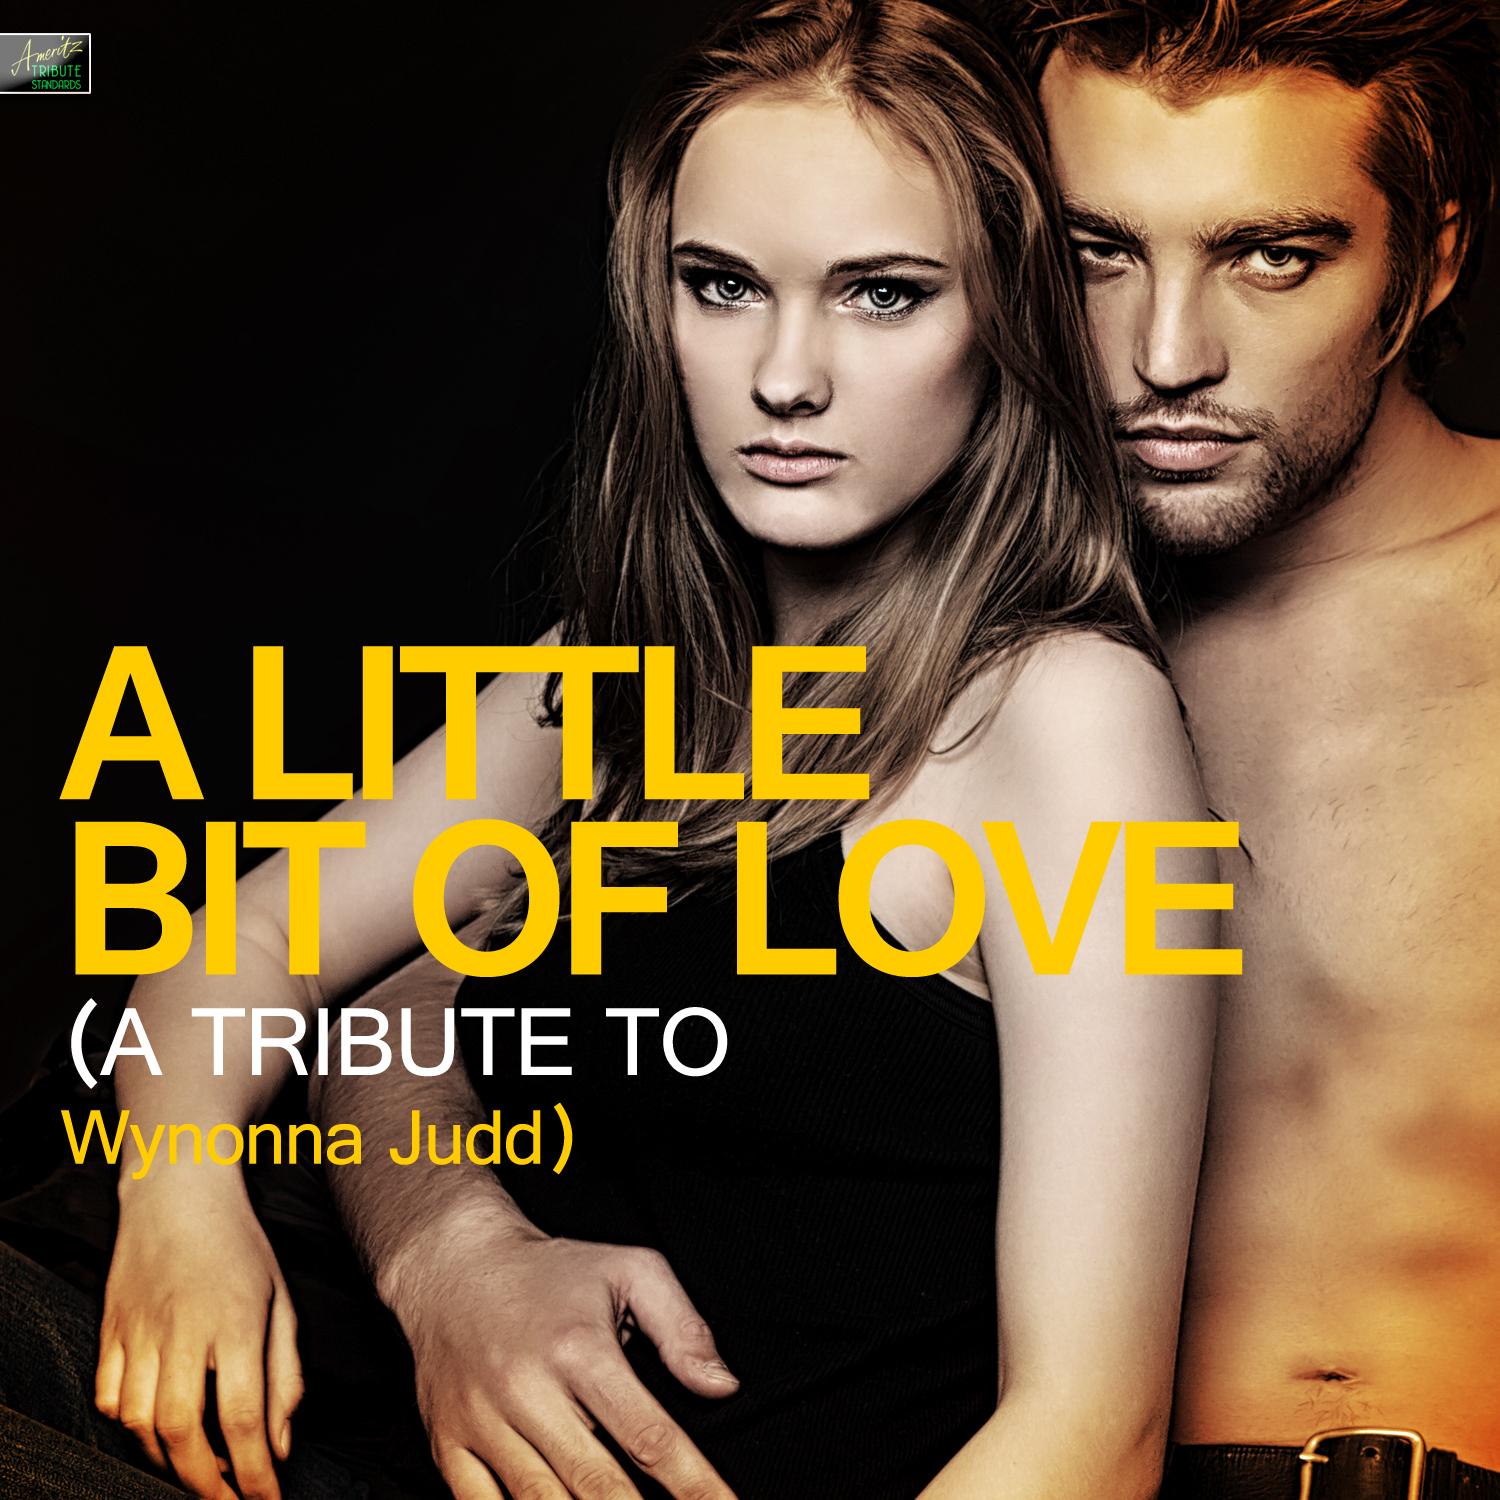 A Little Bit of Love (A Tribute to Wynonna Judd)